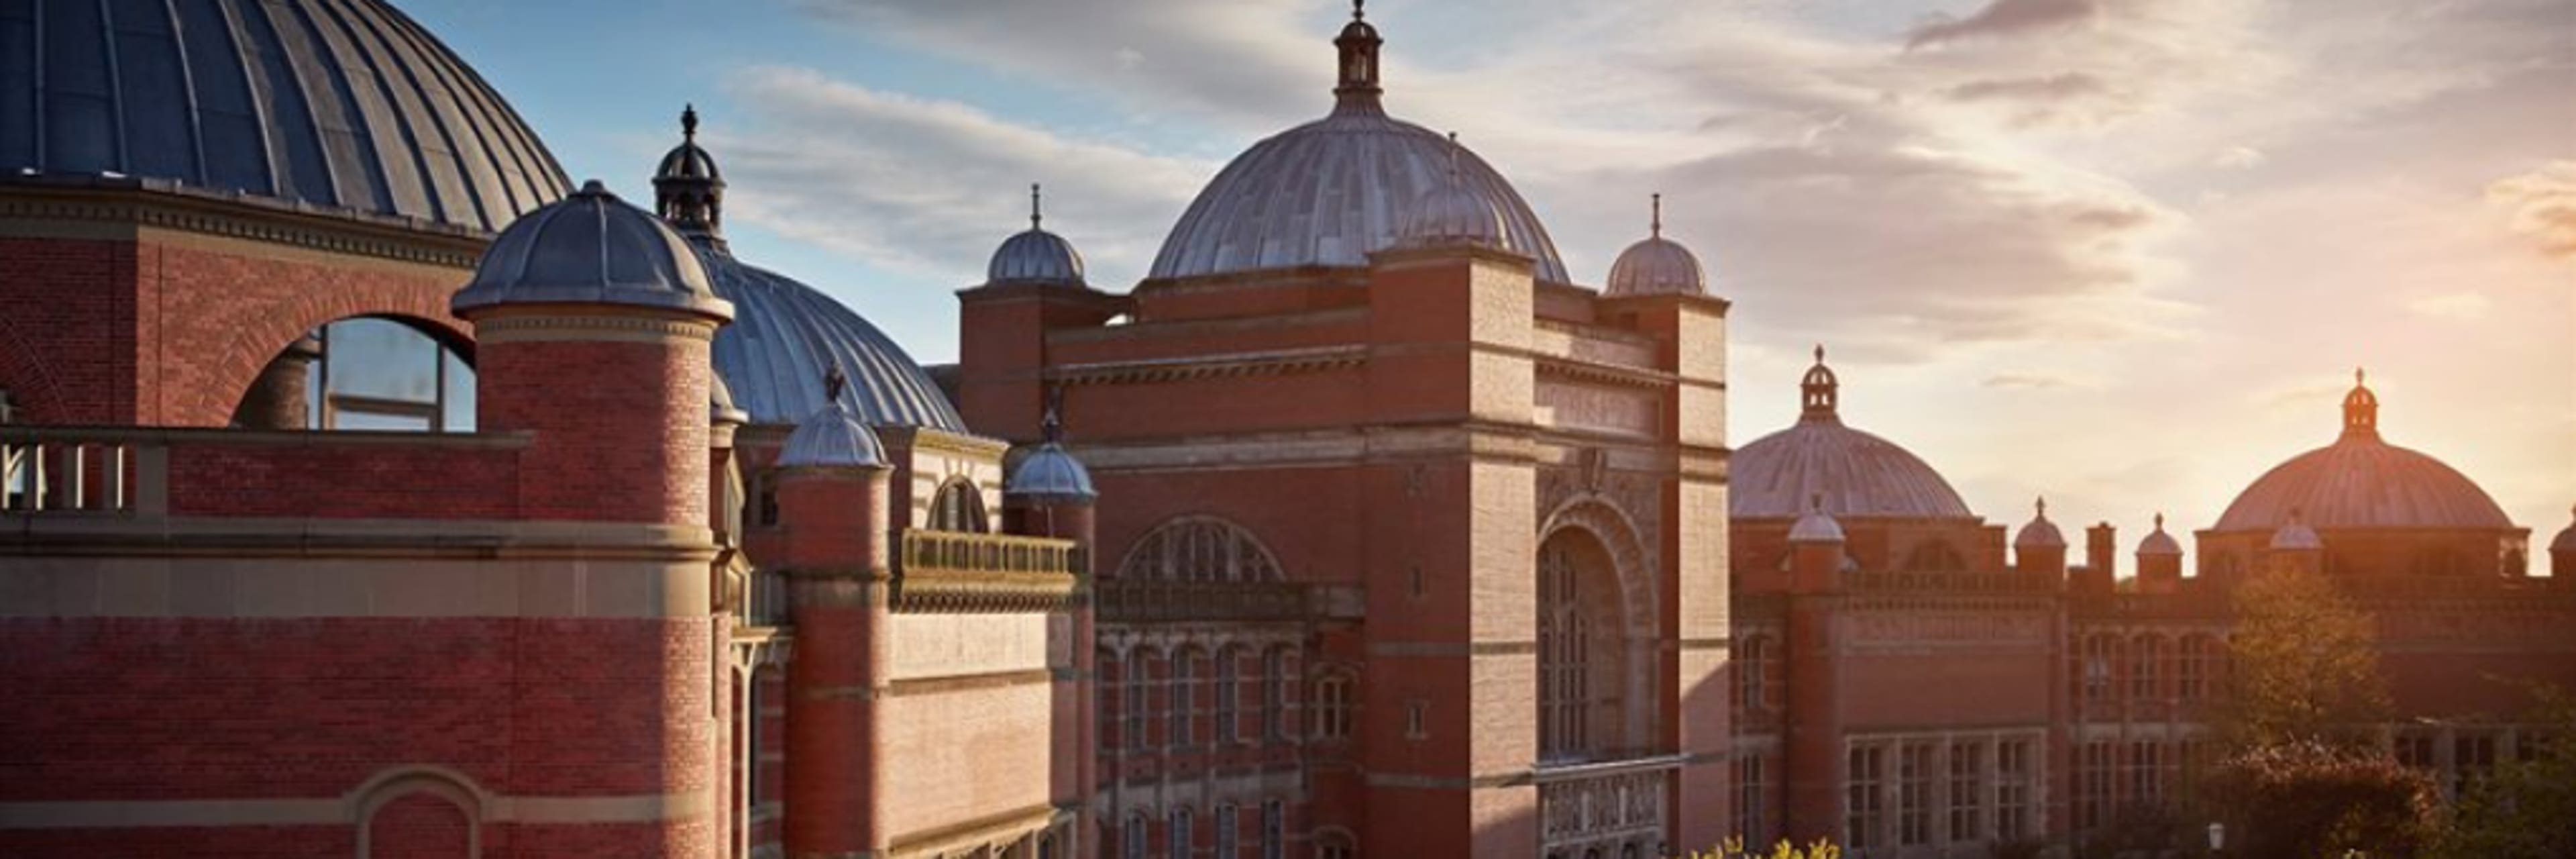 University of Birmingham - image